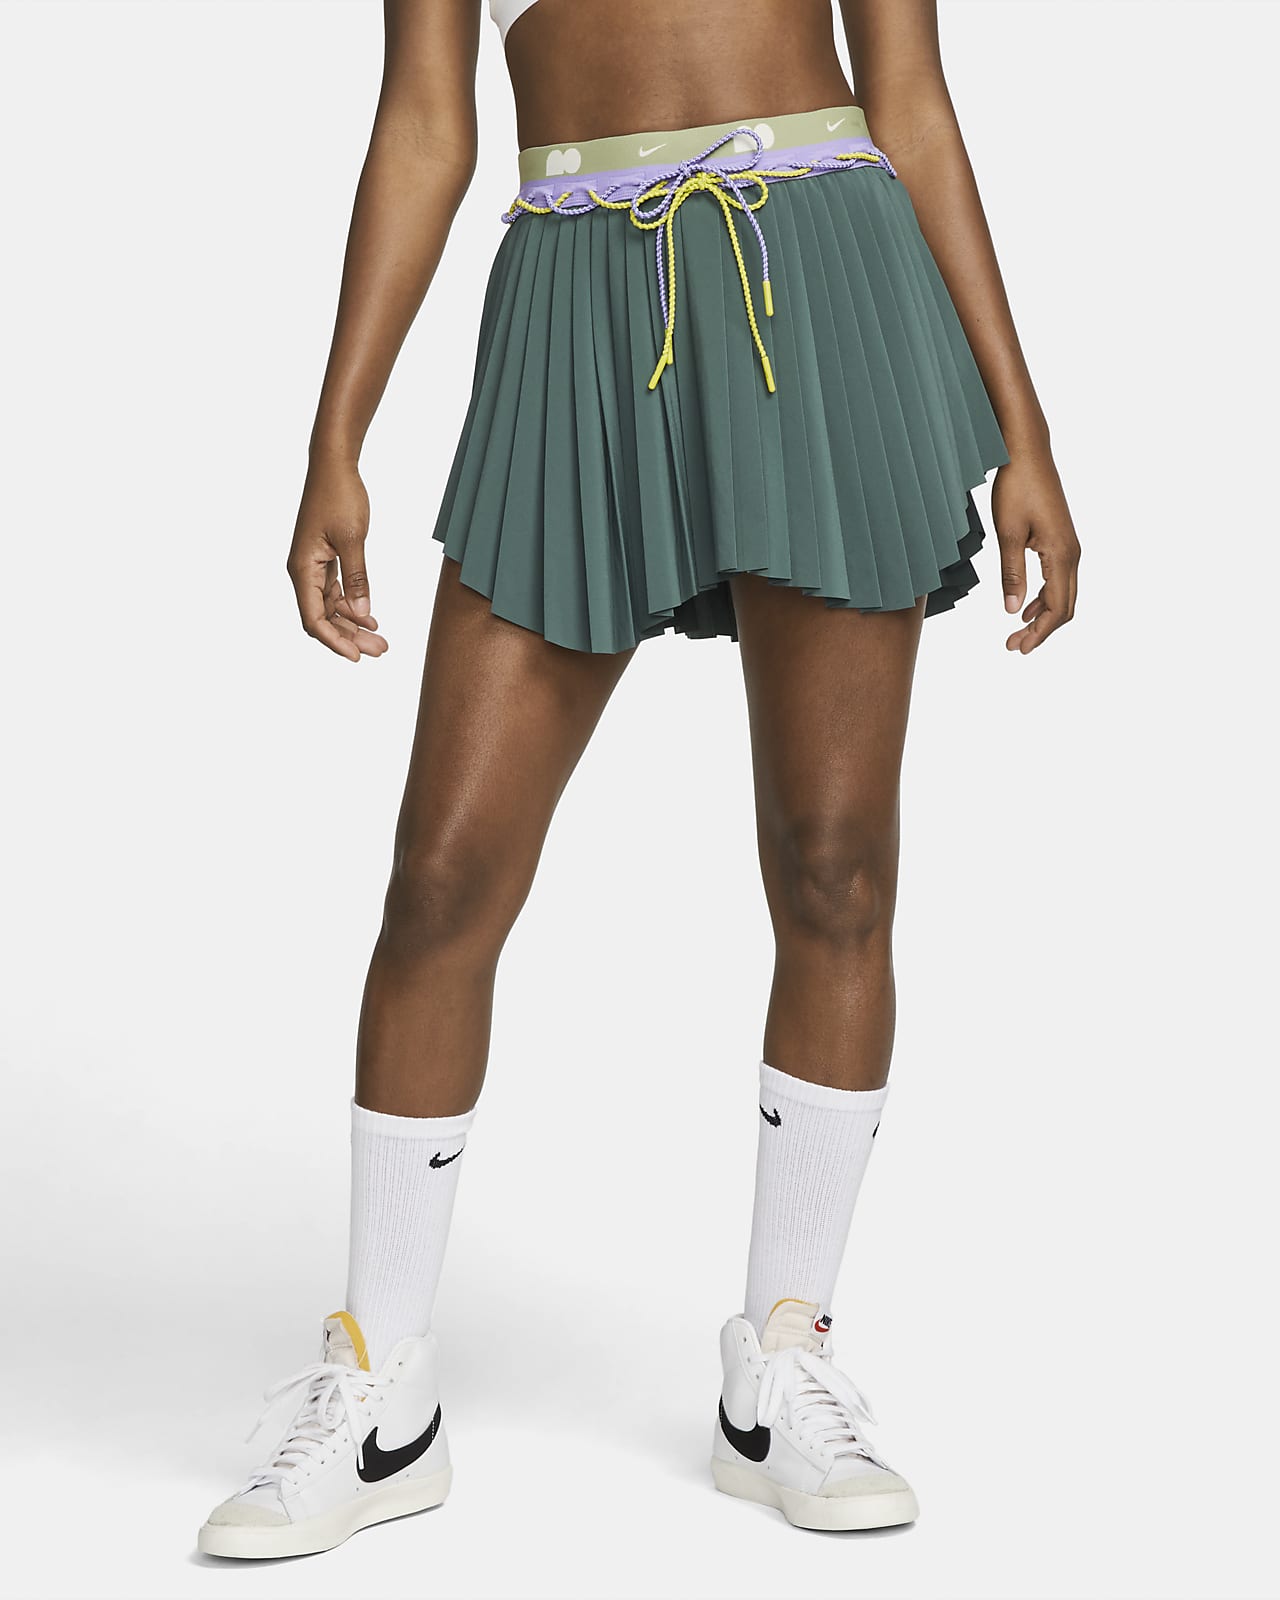 Naomi Osaka Women's Nike AU